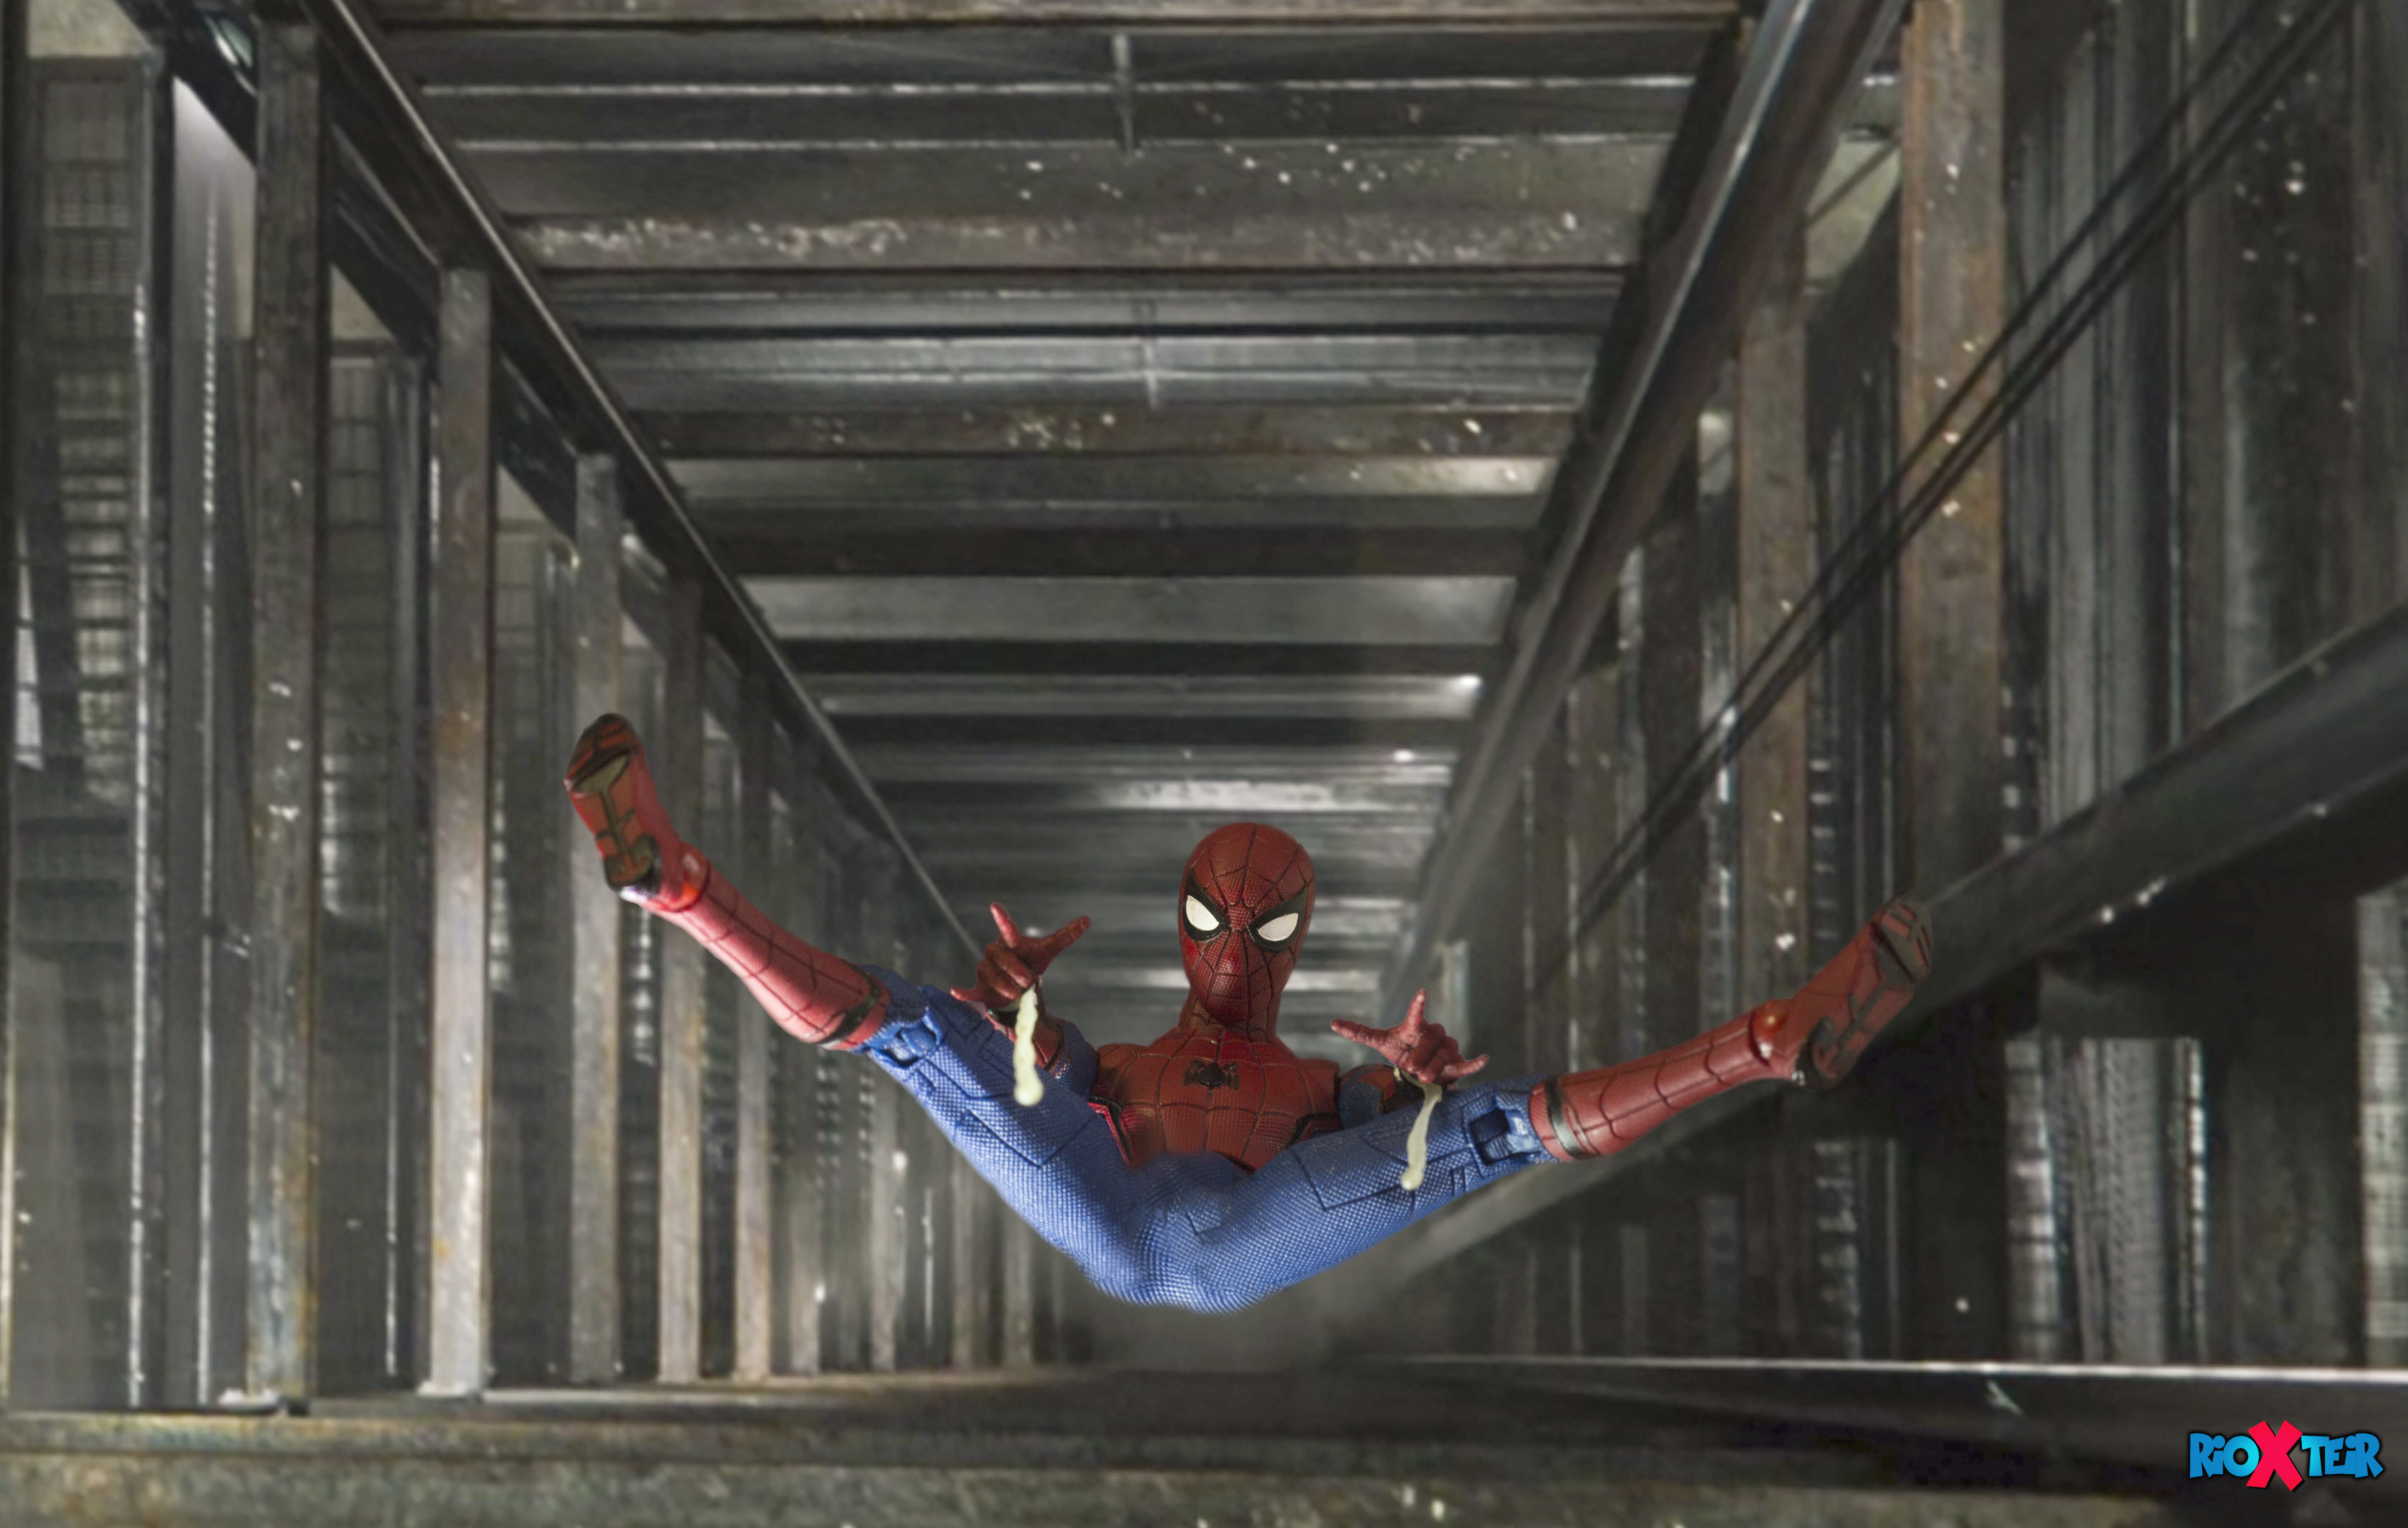 Spider-Man Fell Down